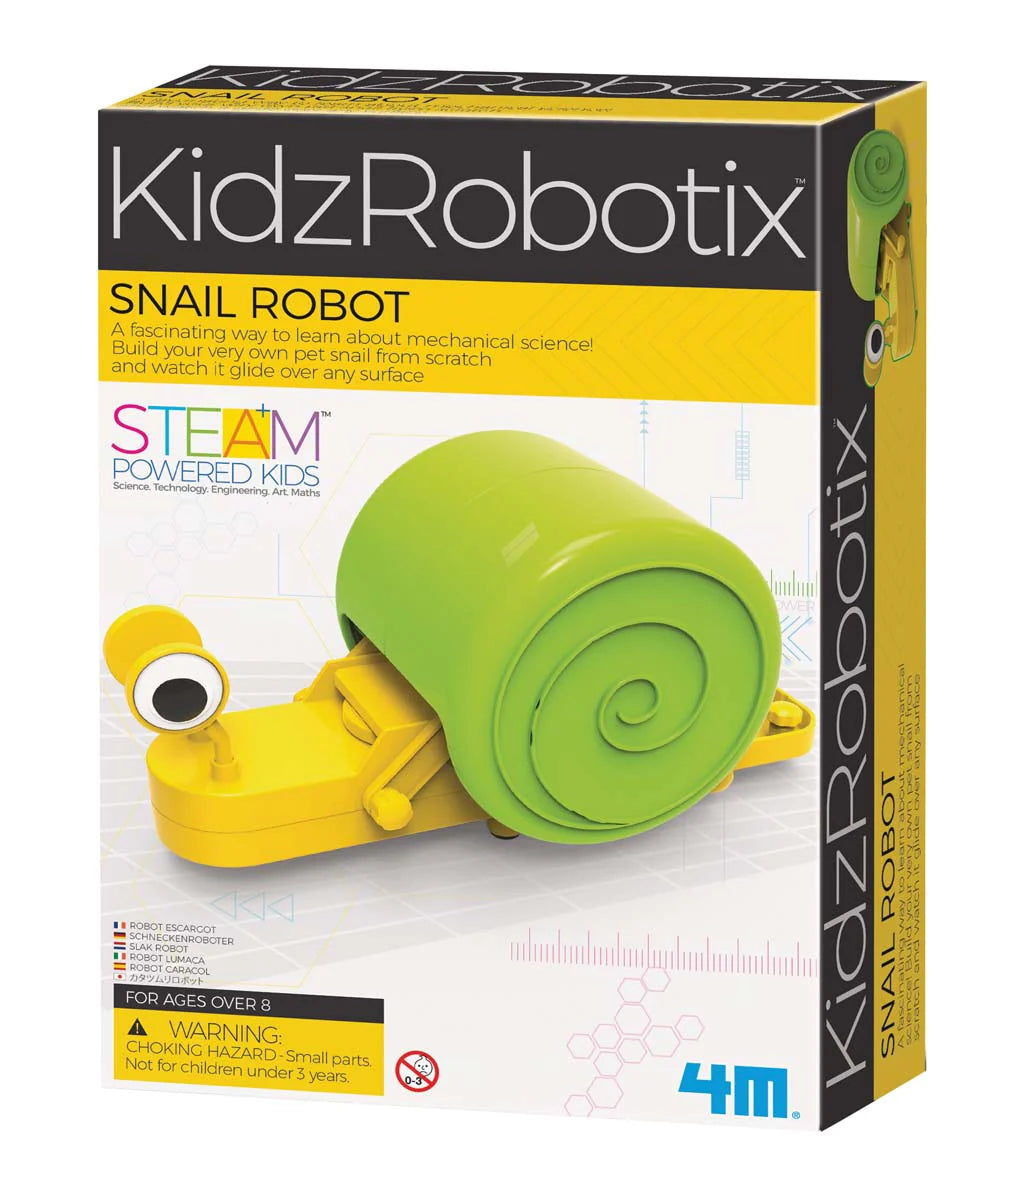 Toysmith Kidz Robotix yellow body green shell googly eye Snail Robot on white with yellow and black labelsbox on white background